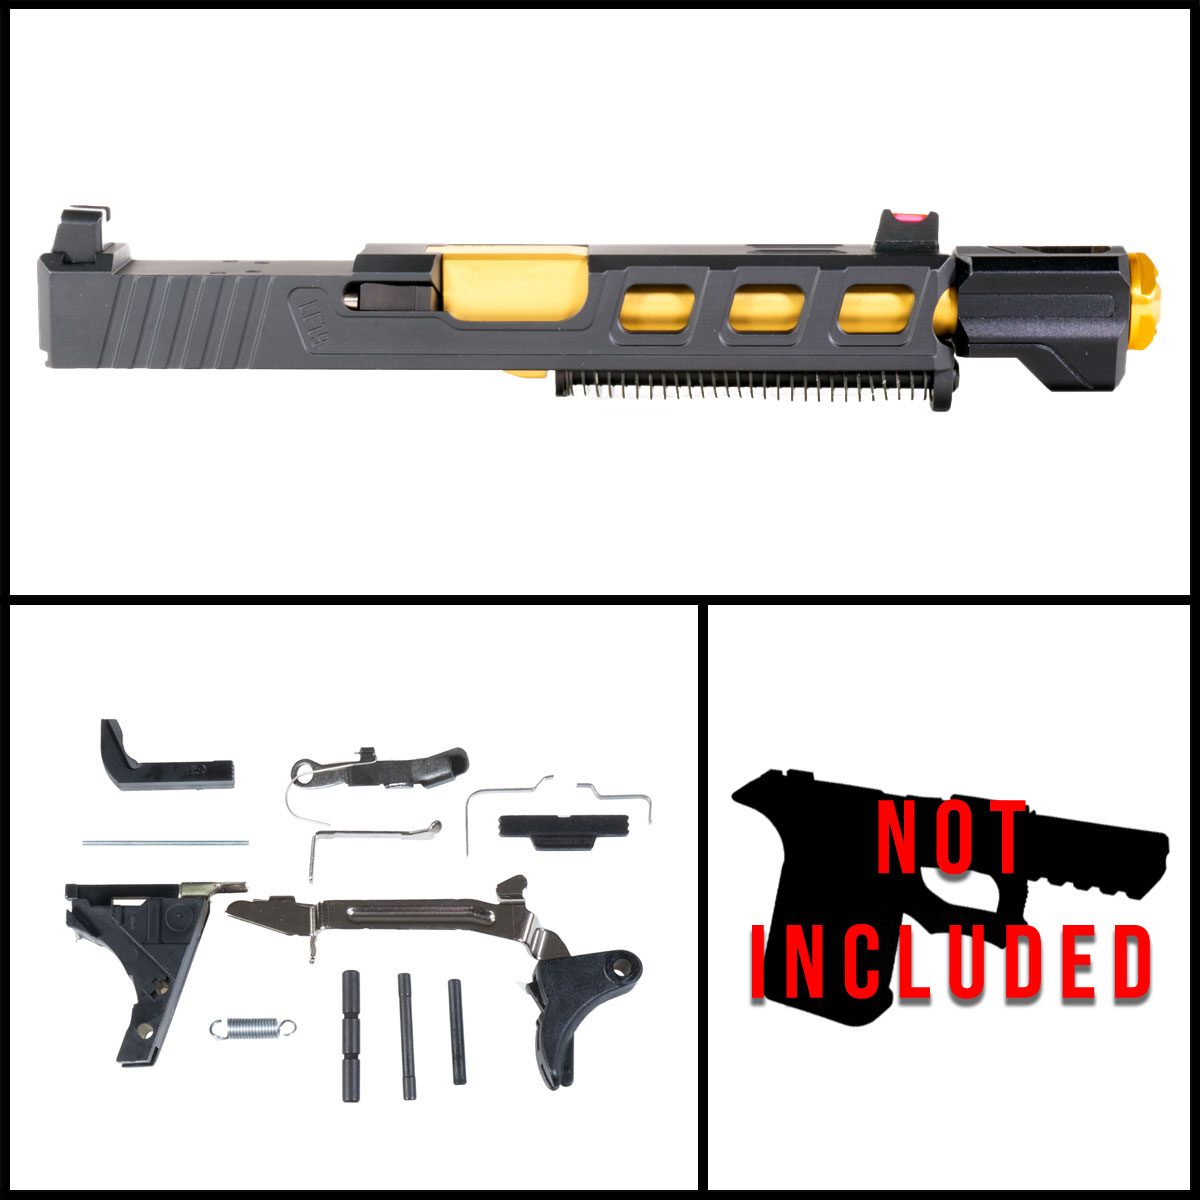 DDS 'Peng w/ Tyrant Designs Compensator' 9mm Full Pistol Build Kit (Everything Minus Frame) - Glock 19 Gen 1-3 Compatible